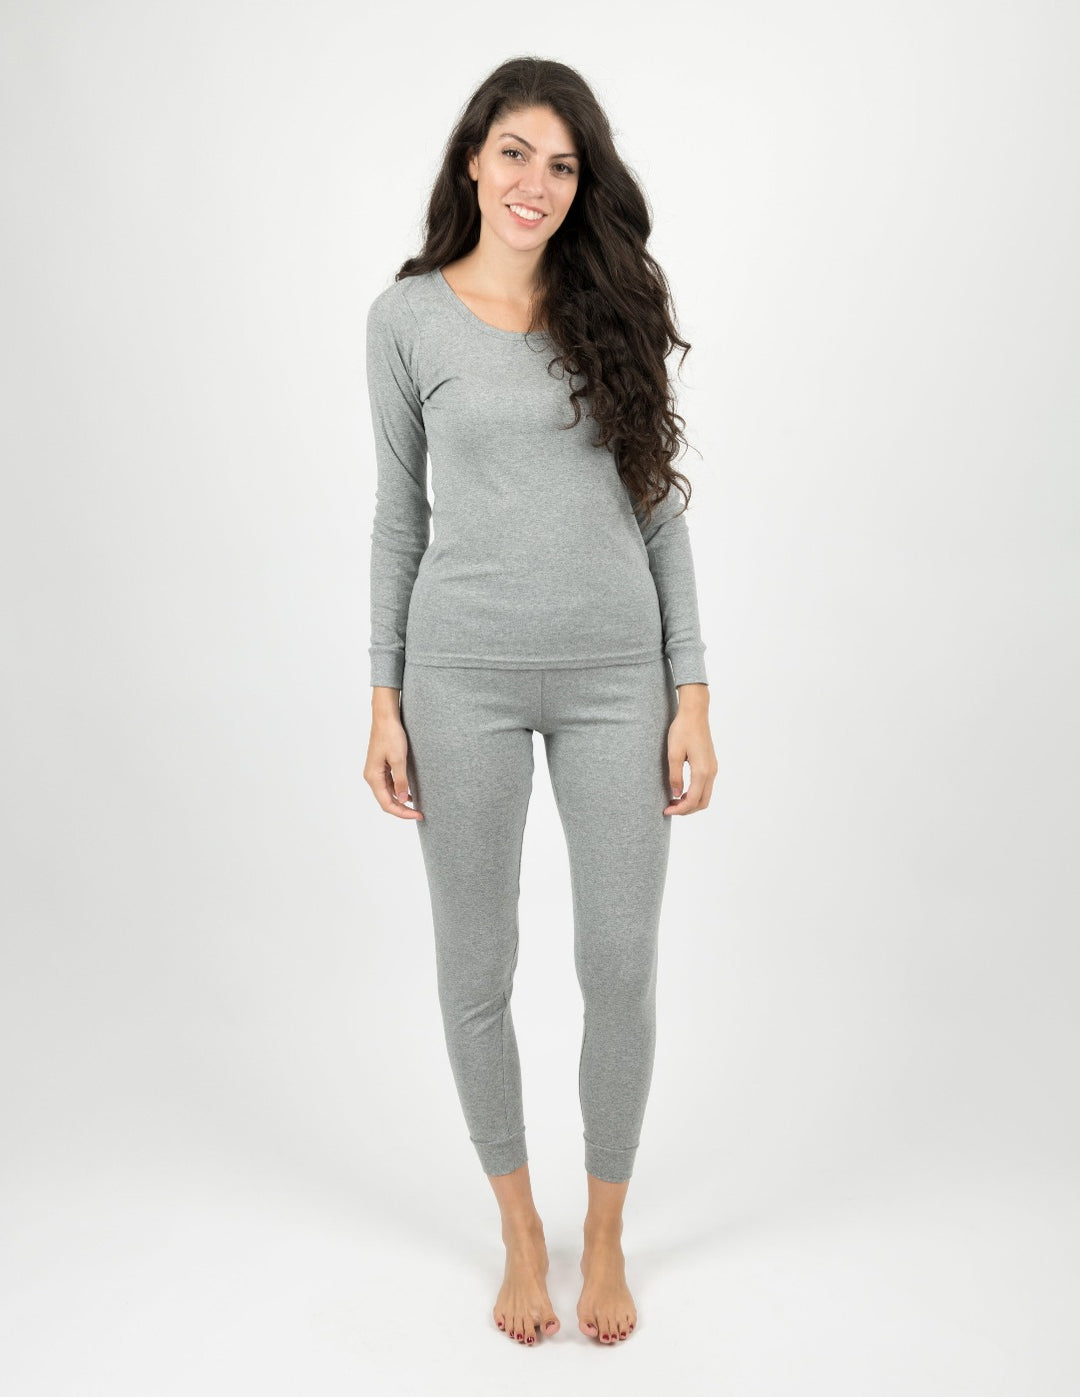 light grey solid color women's pajama